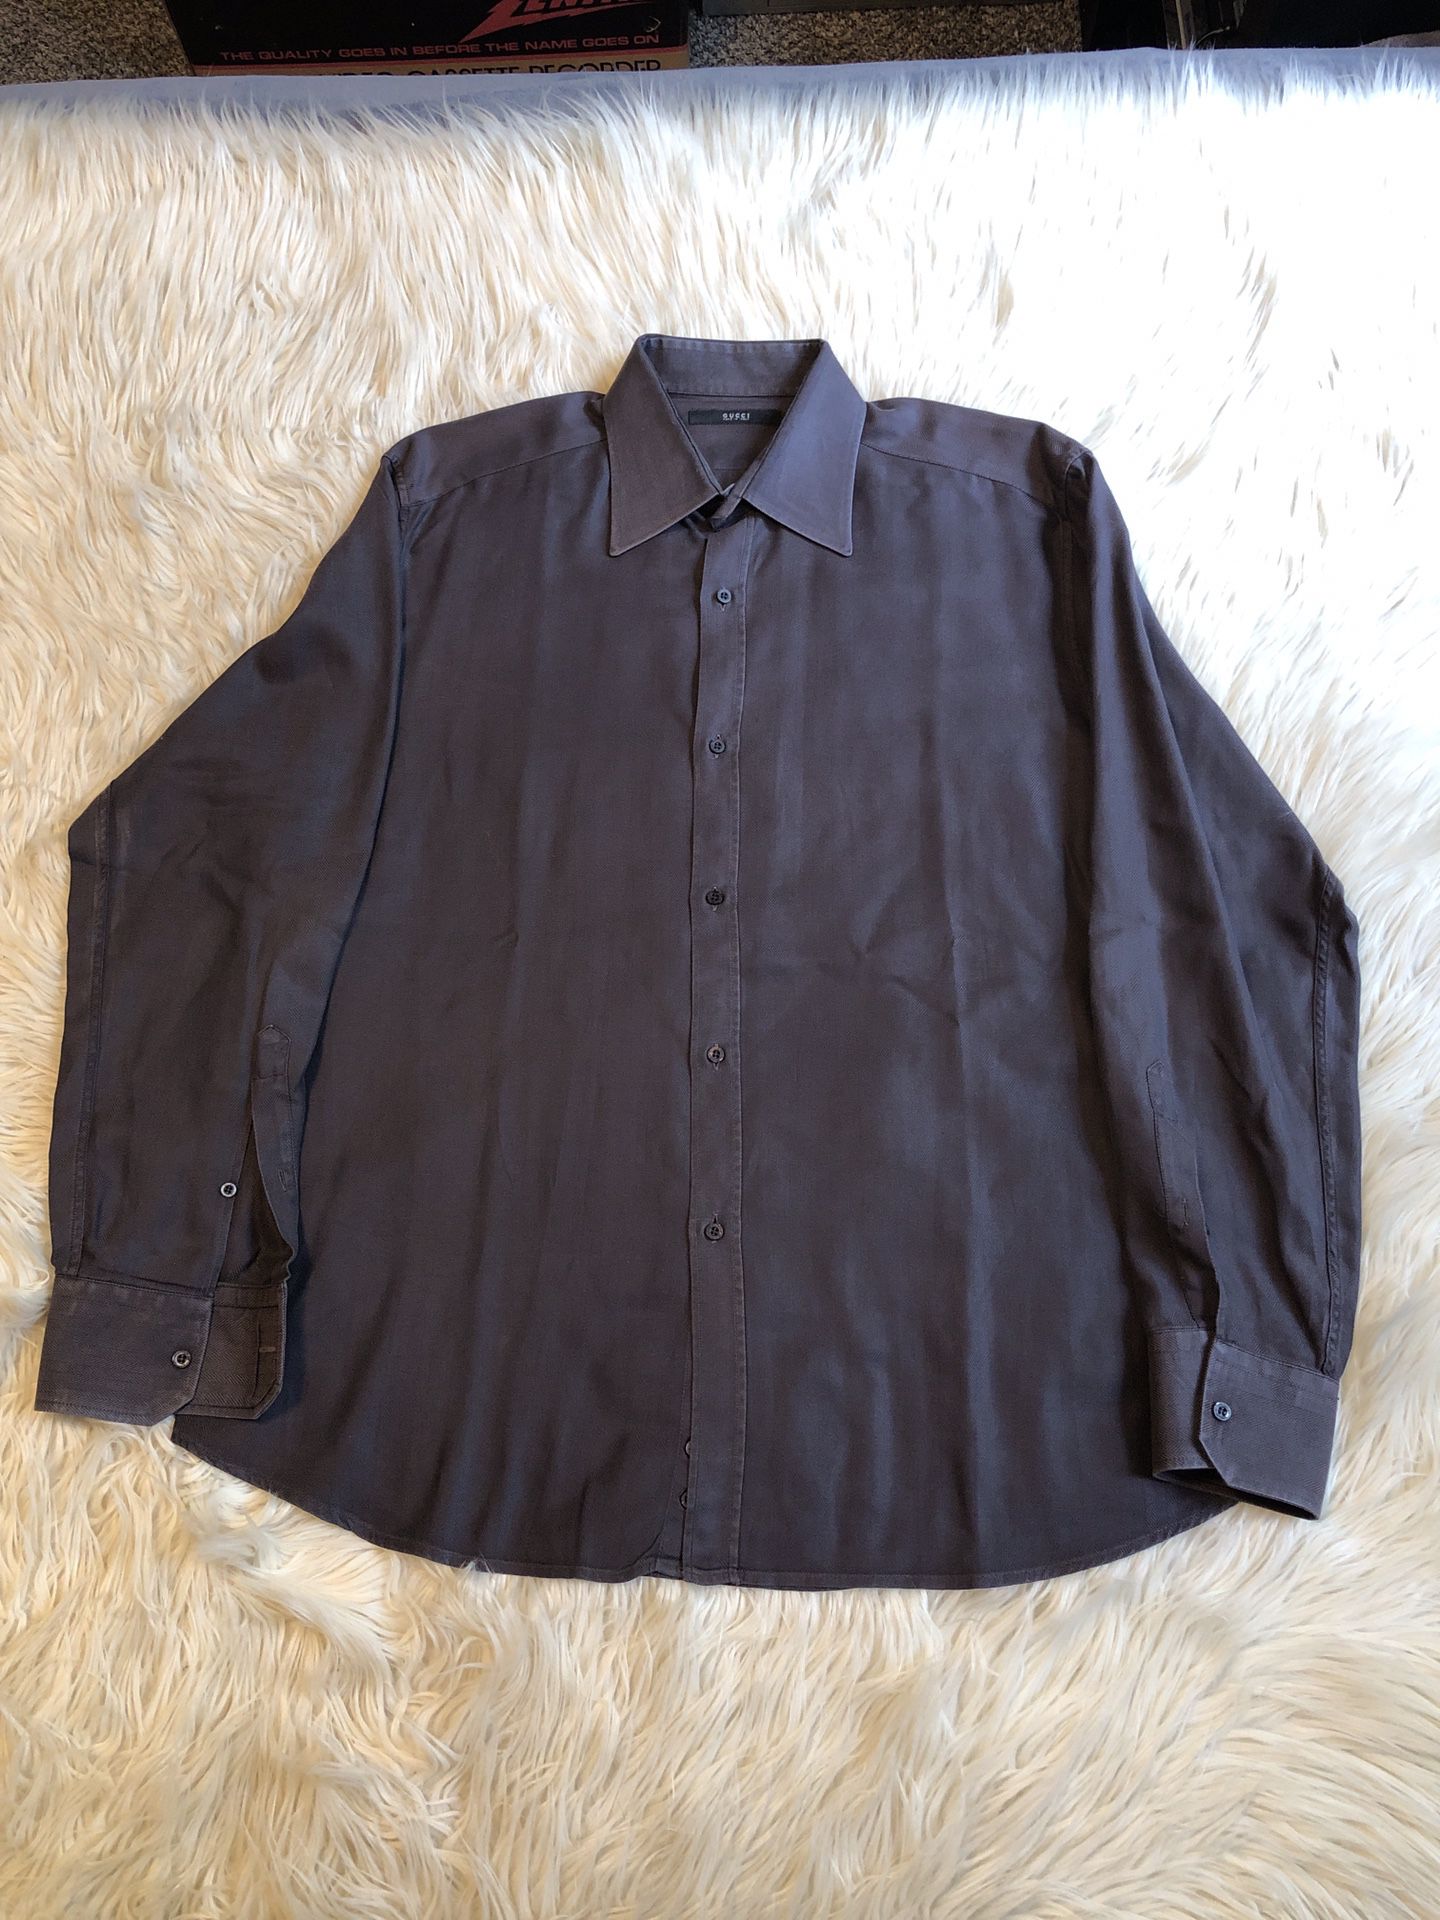 GUCCI Black Woven Button Up Collared Cotton Dress Shirt Long Sleeve Men 43/17